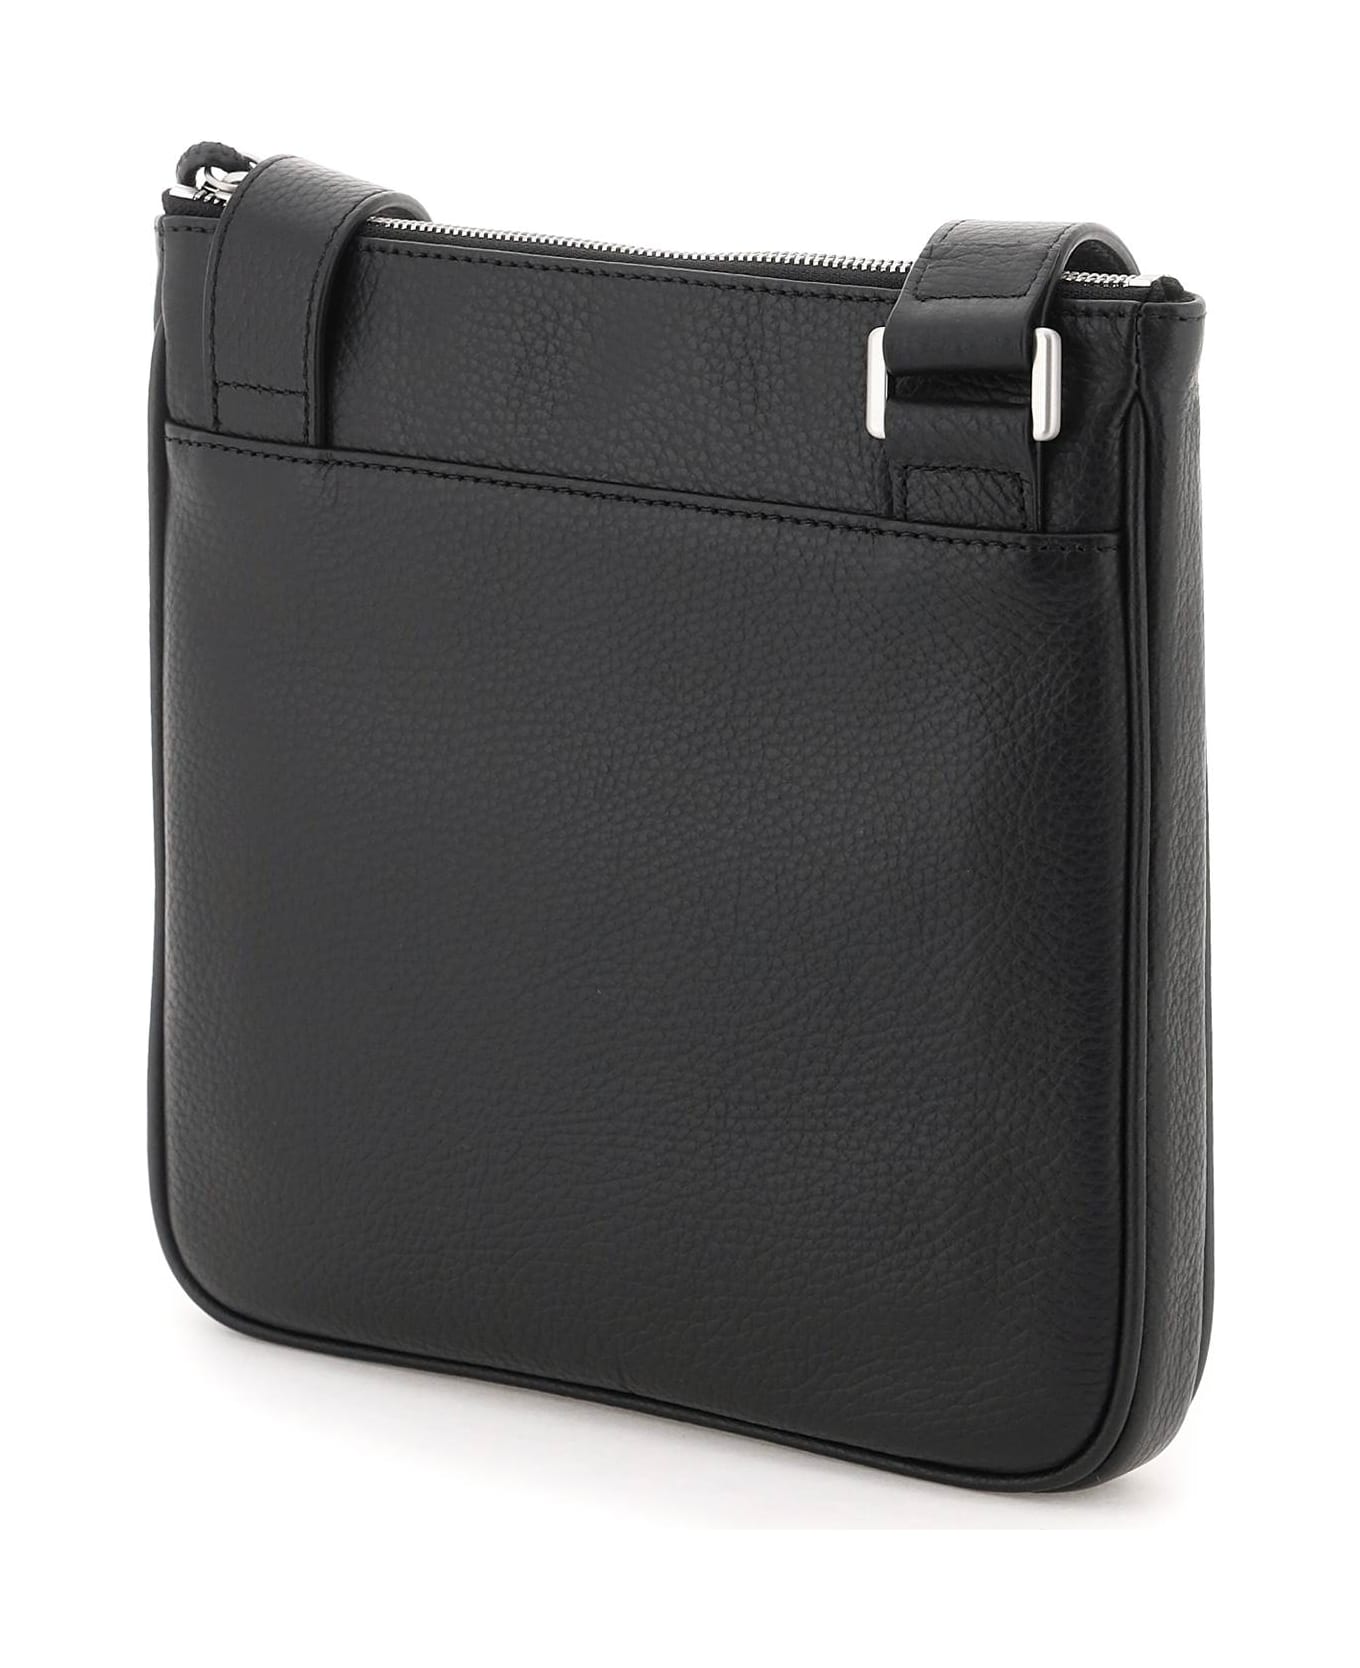 Emporio Armani Leather Crossbody Bag - Nero